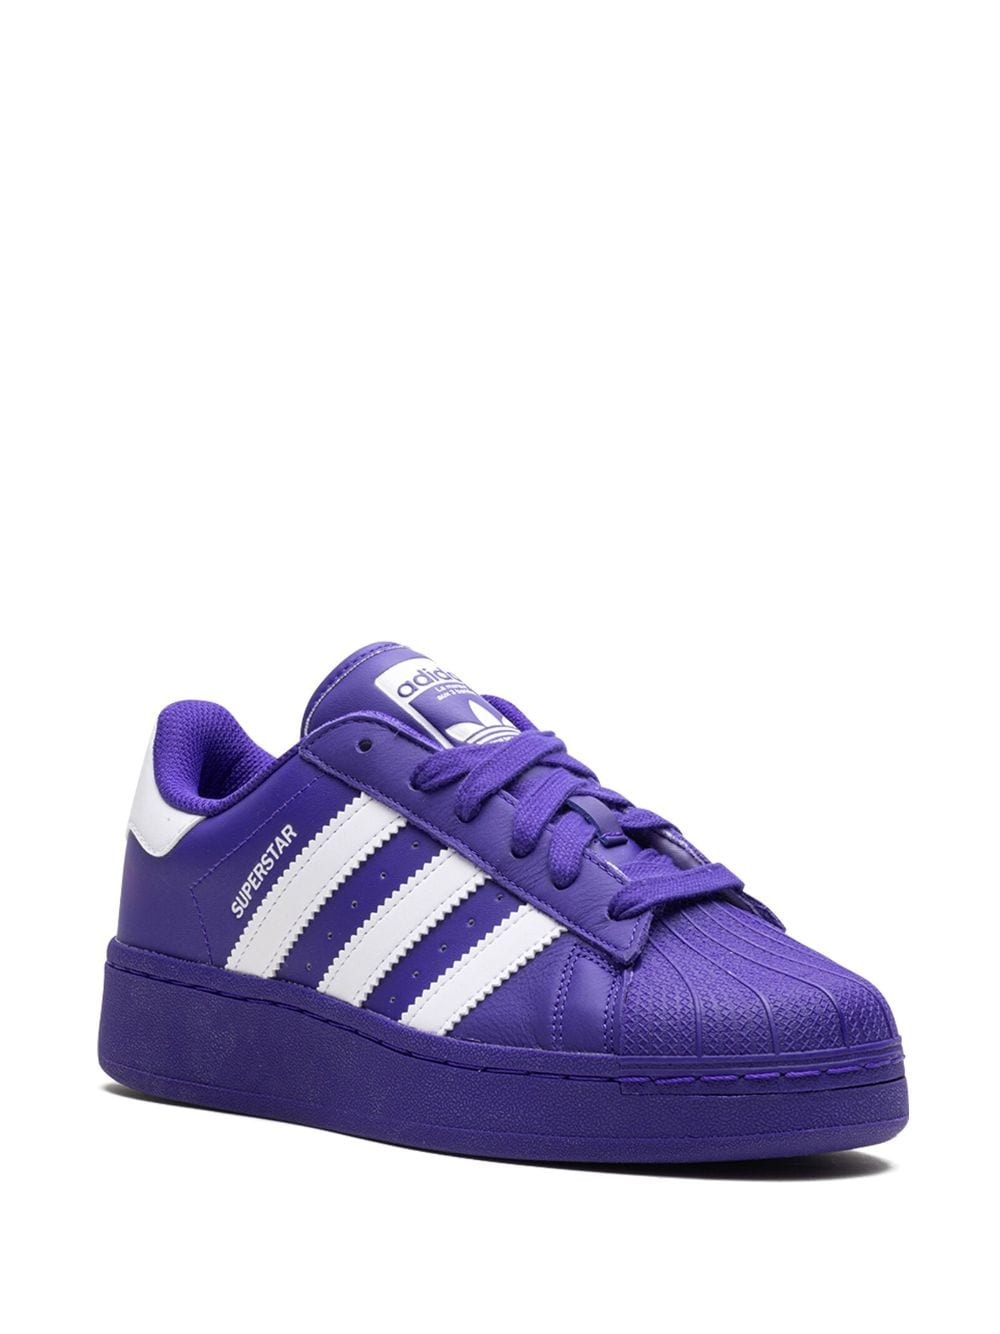 Superstar XLG "Purple" sneakers - 2